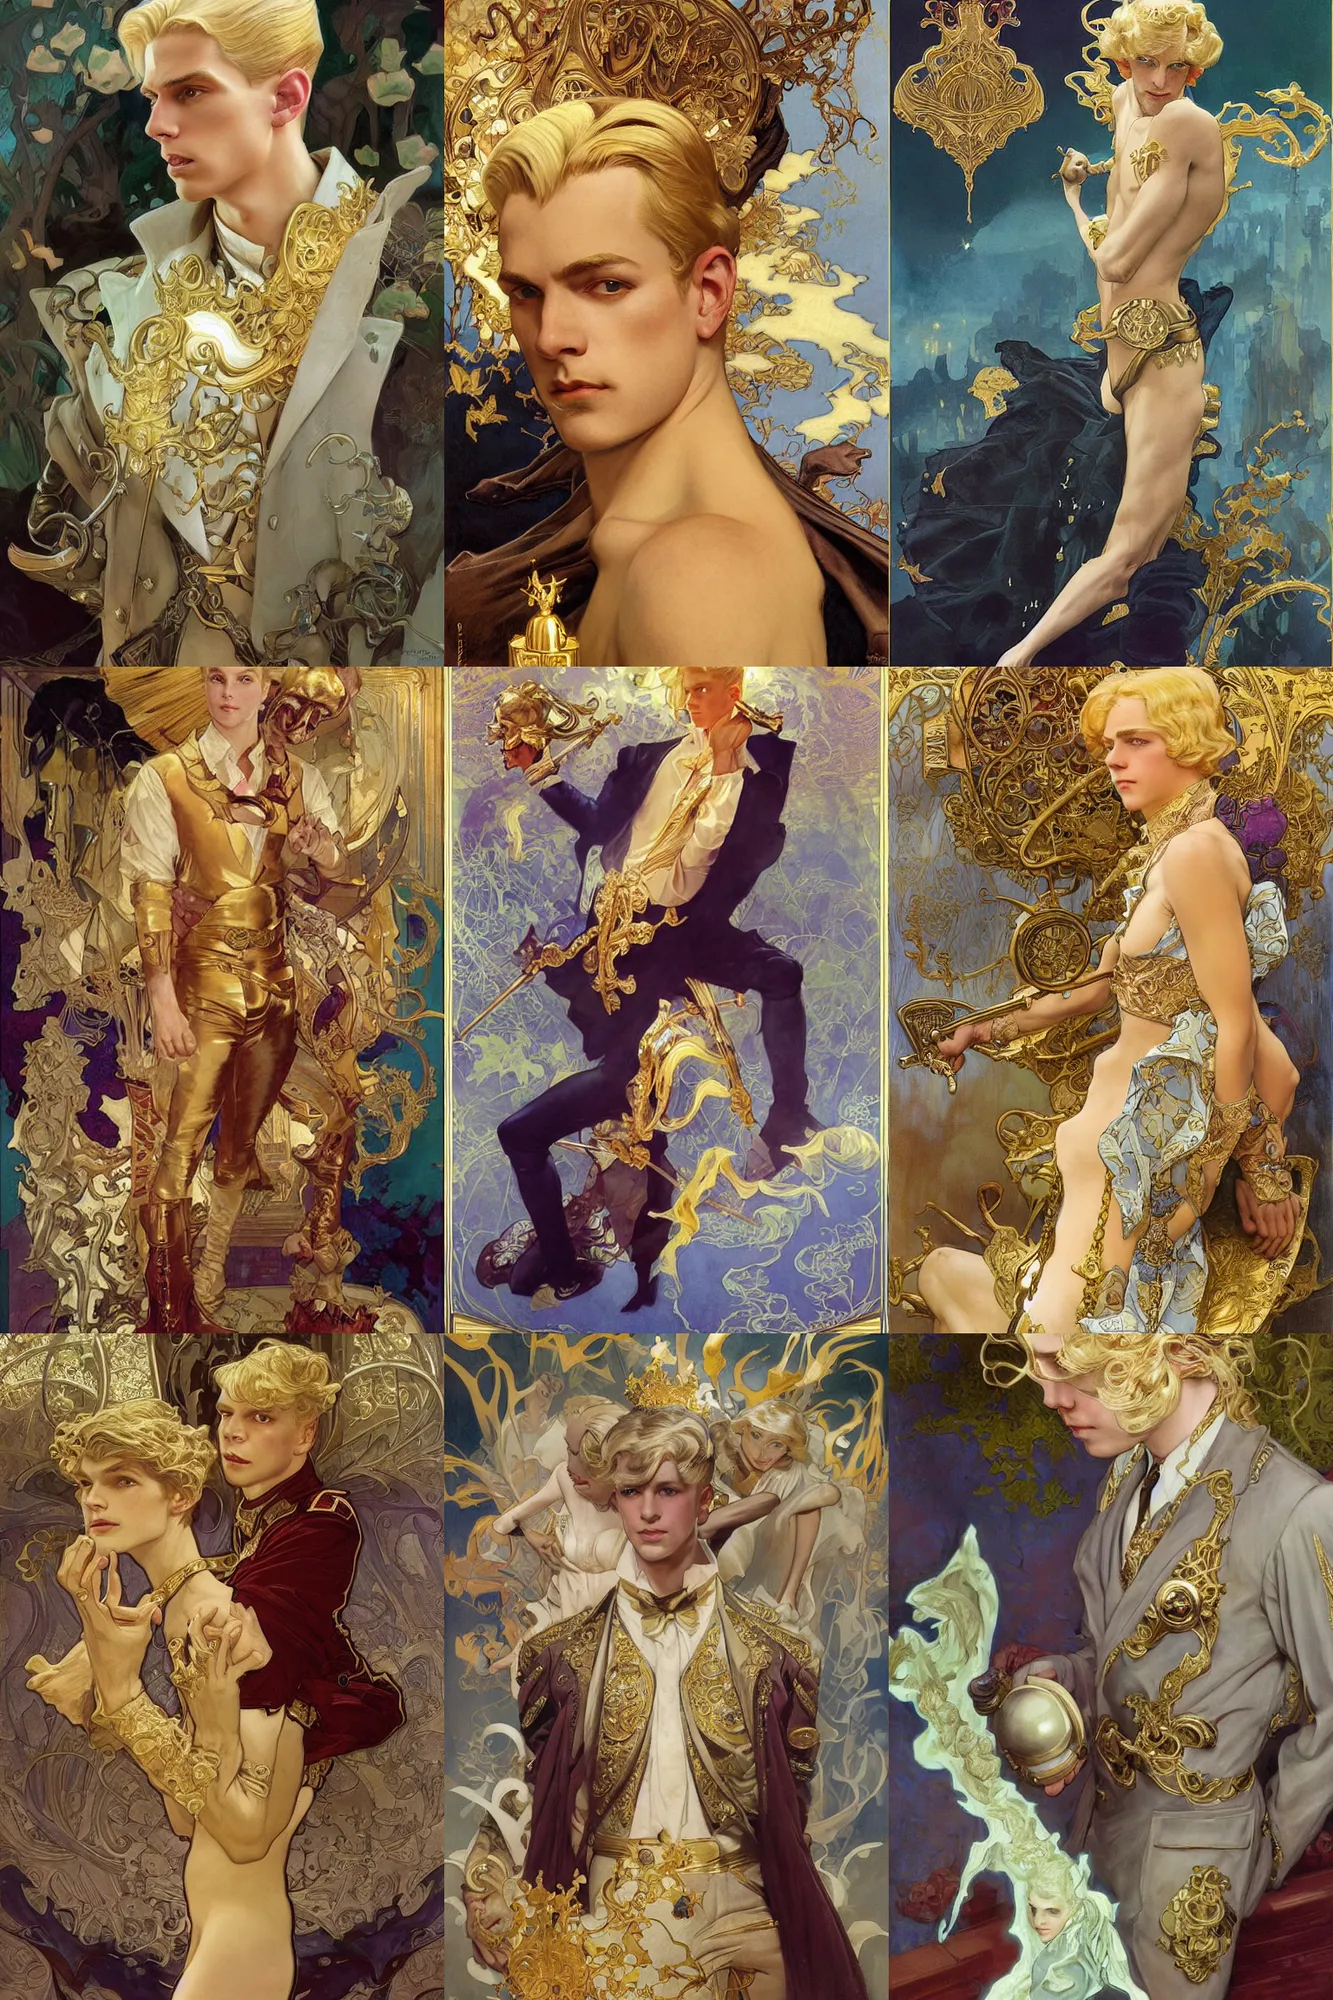 Prompt: beautiful young prince, blonde hair, gold, 1 9 2 0 s fashion, fantasy, art by joseph leyendecker, peter mohrbacher, dean cornwell, donato giancola, ruan jia, marc simonetti, cedric peyravernay, alphonse mucha